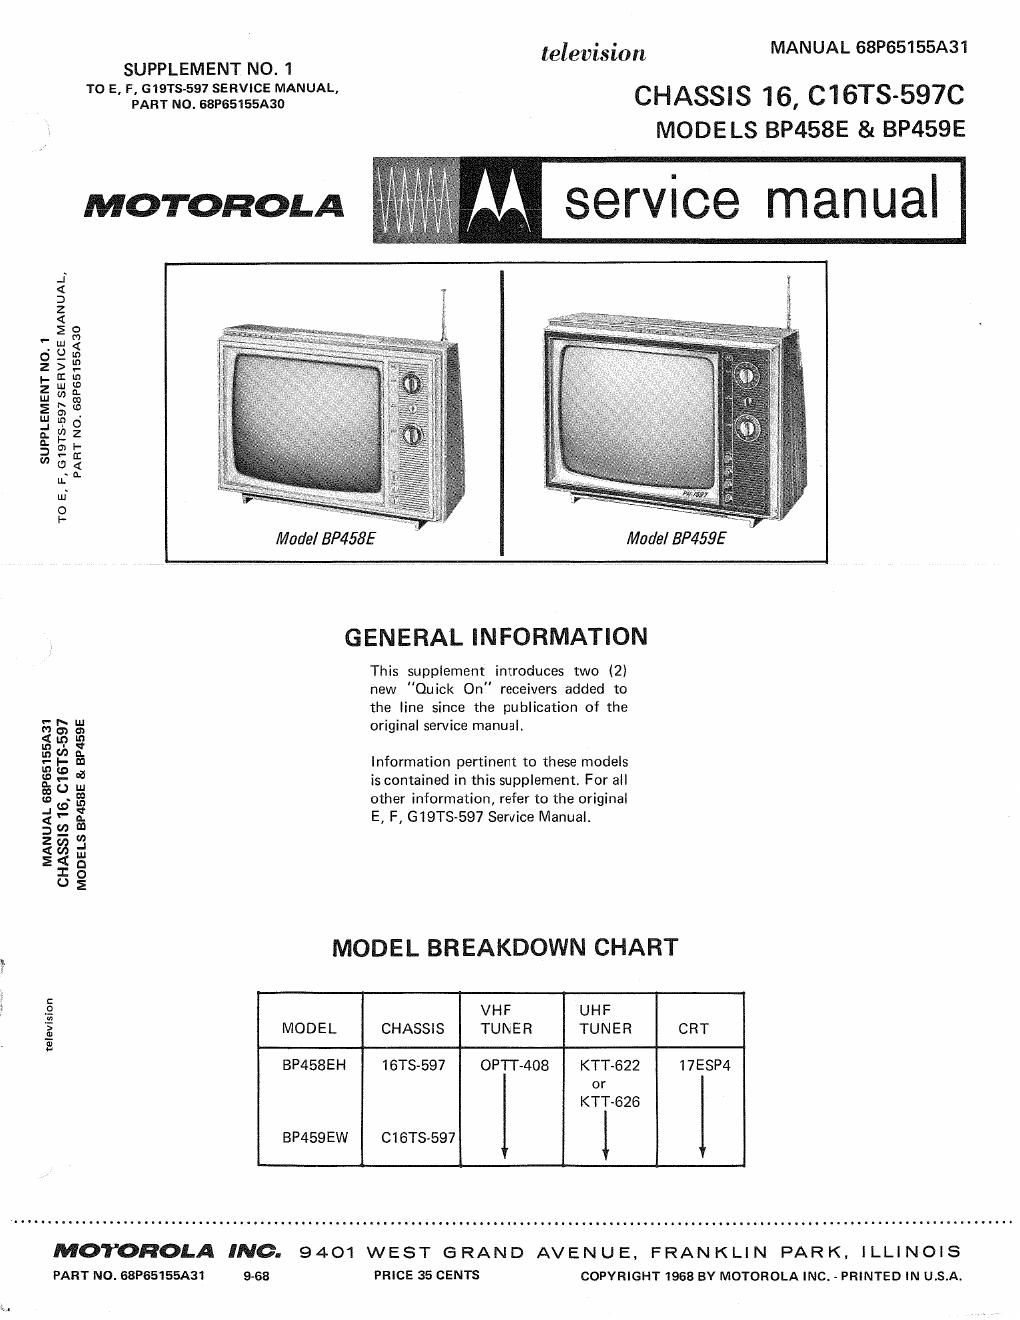 motorola bp 459 e service manual